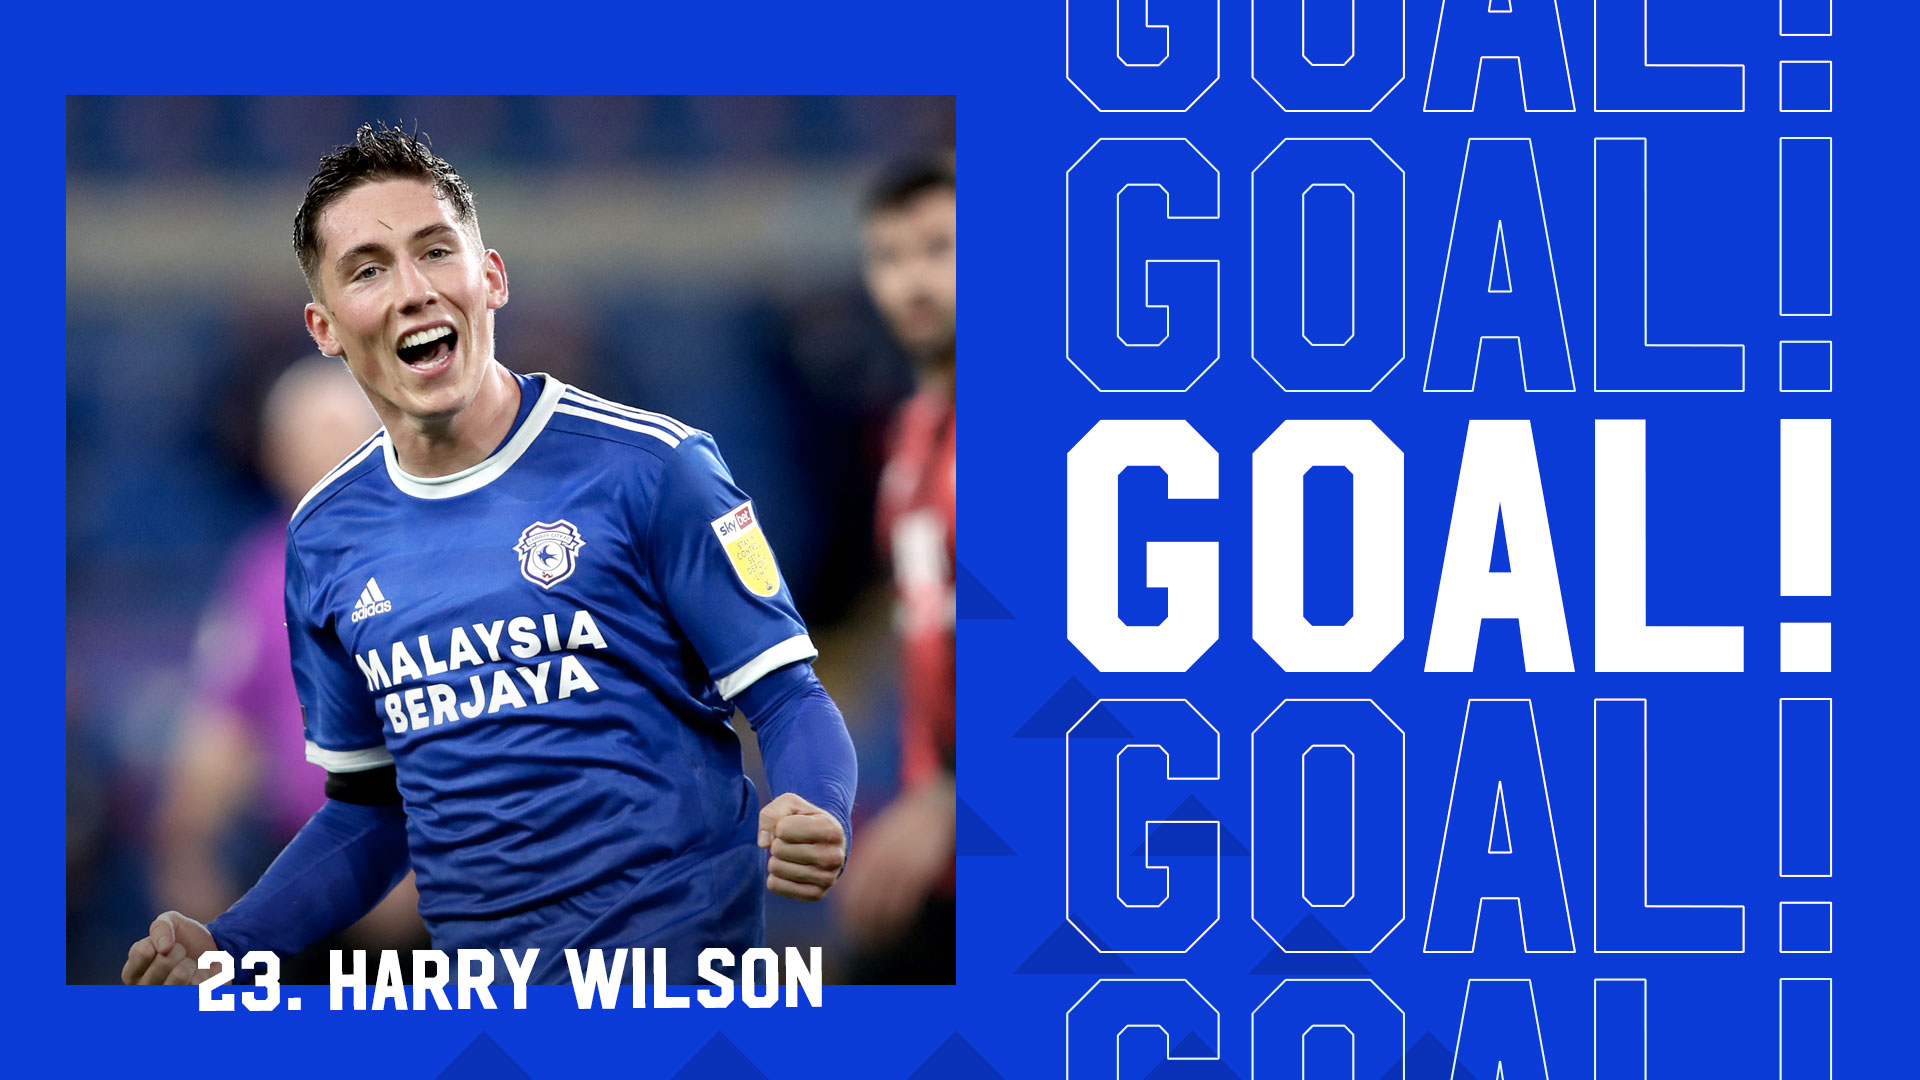 Harry Wilson puts City ahead!